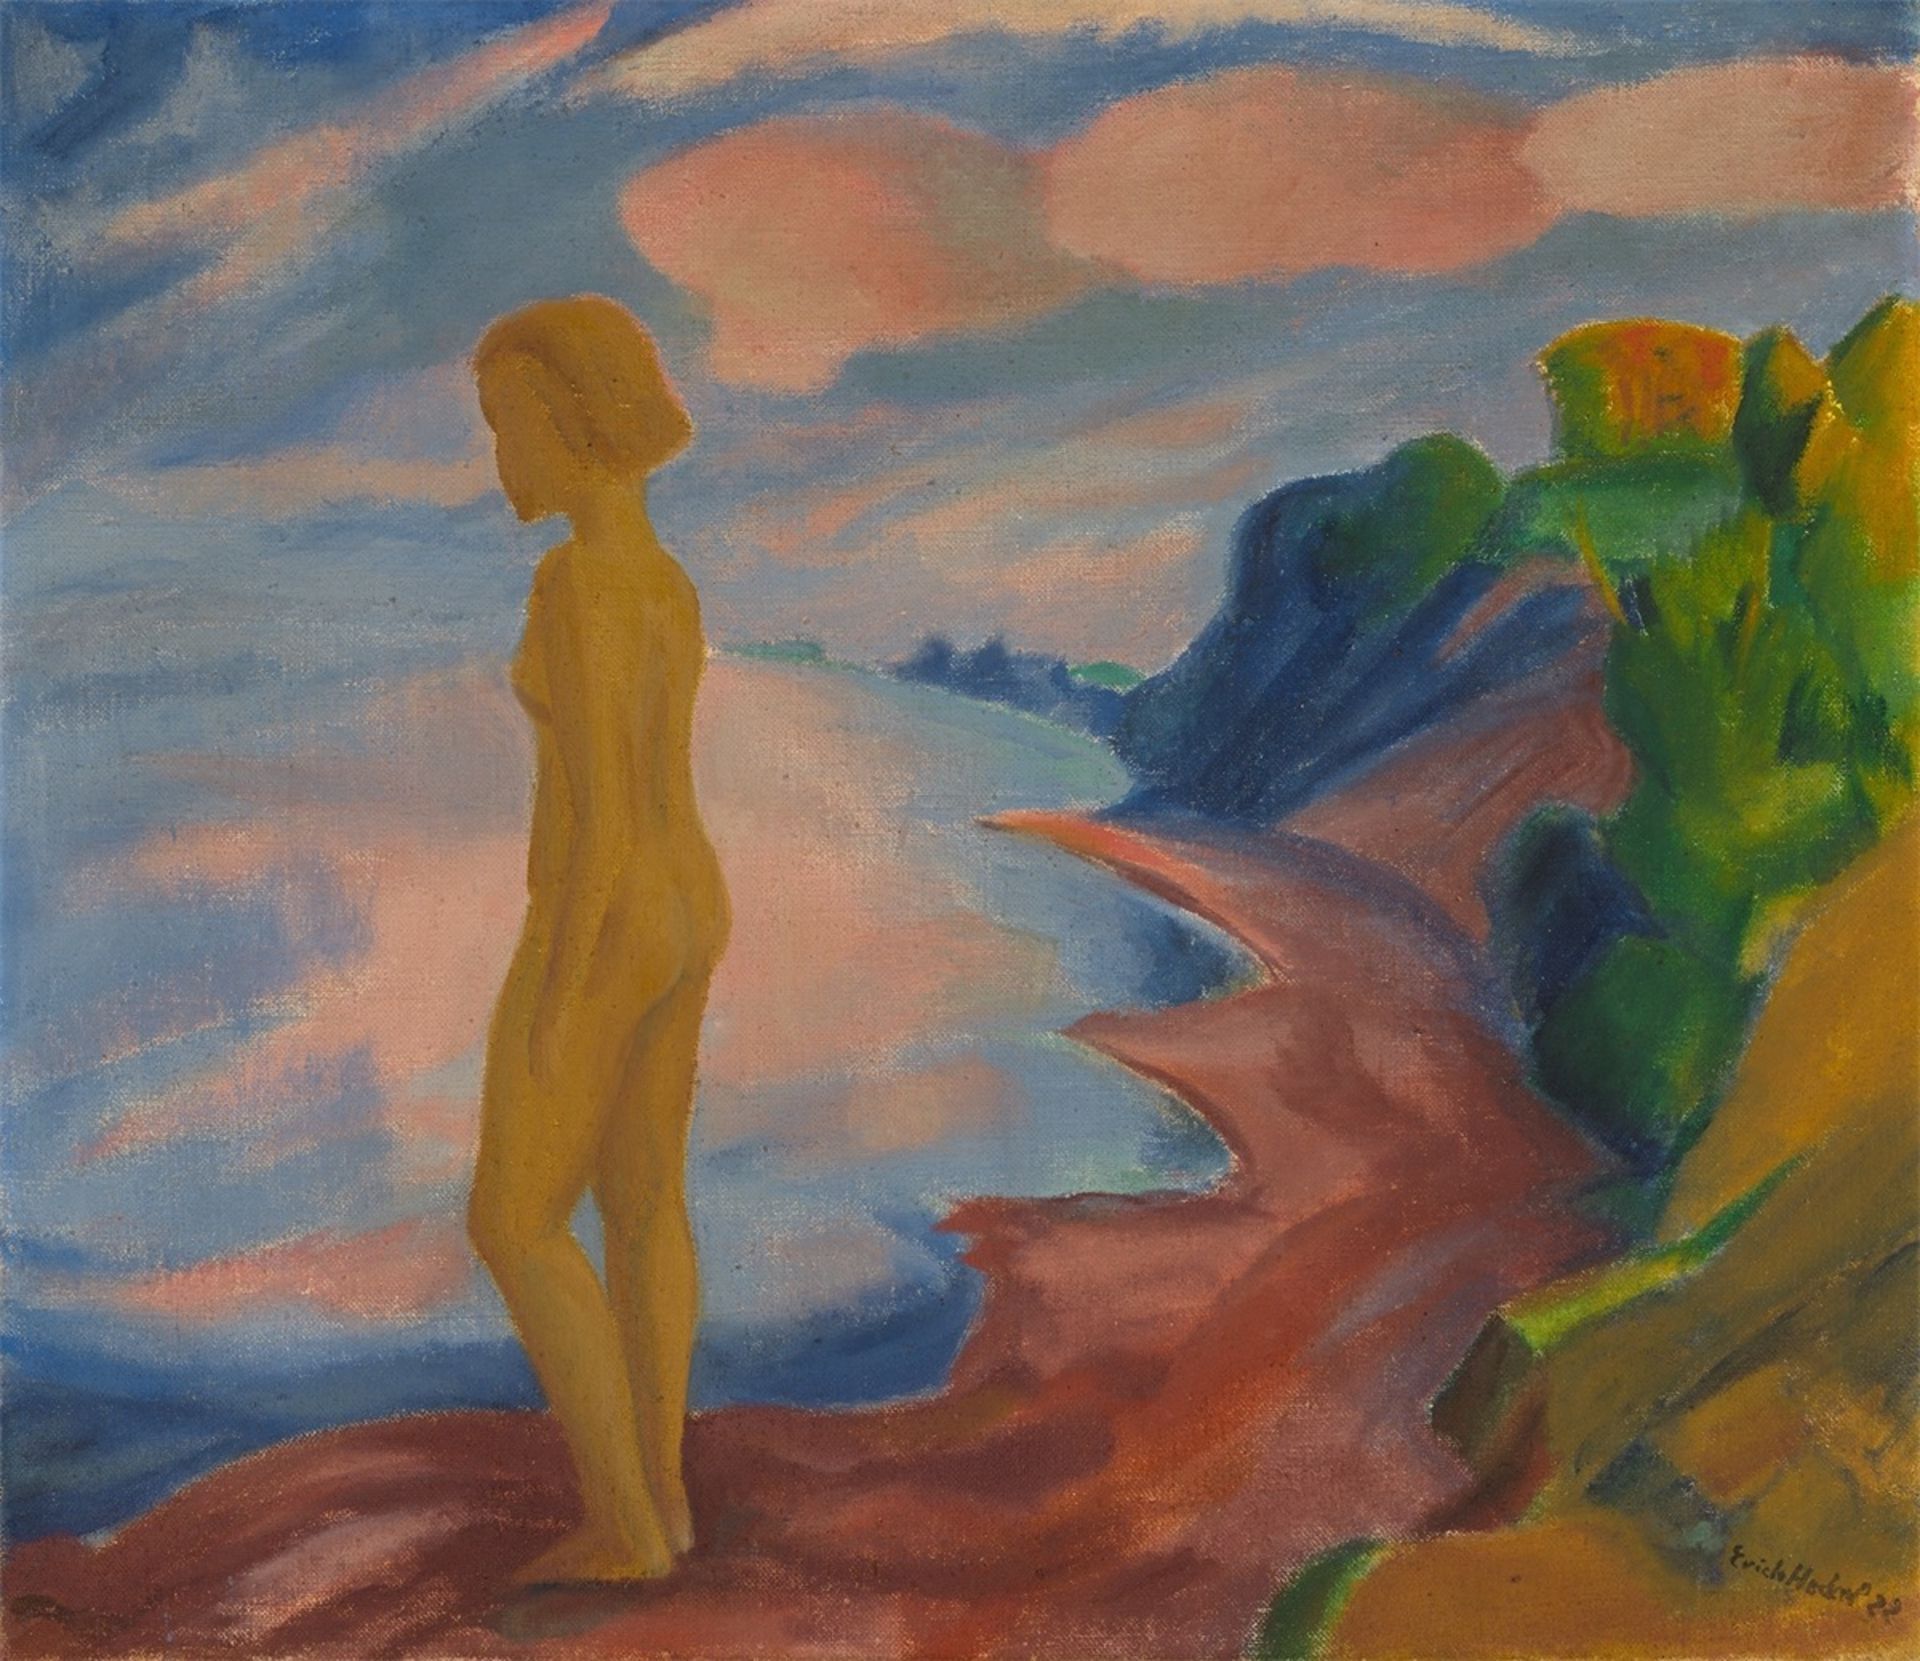 Erich Heckel. ”Mädchen am Meer”. 1922